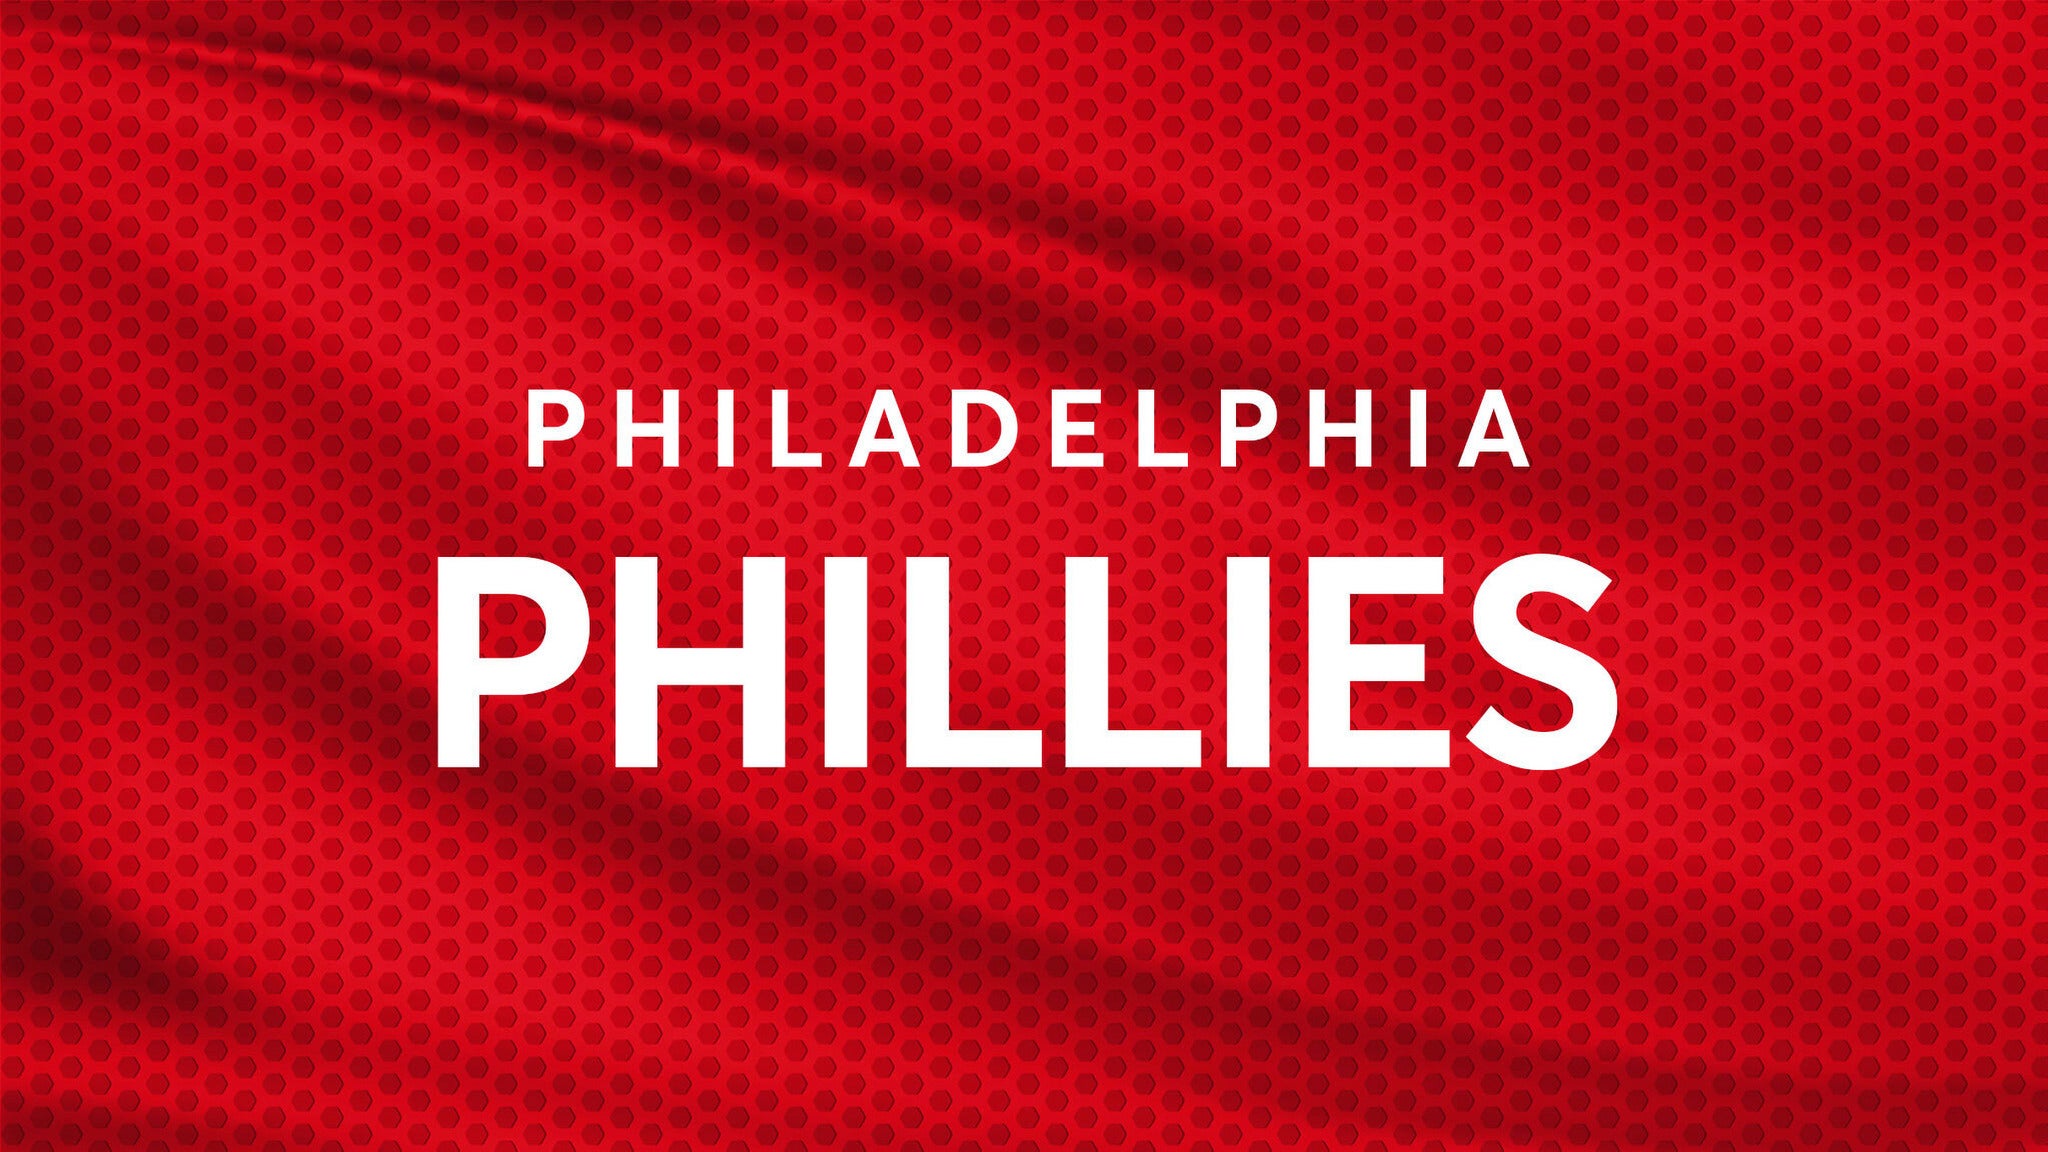 Philadelphia Phillies wallpaper by Densports - Download on ZEDGE™